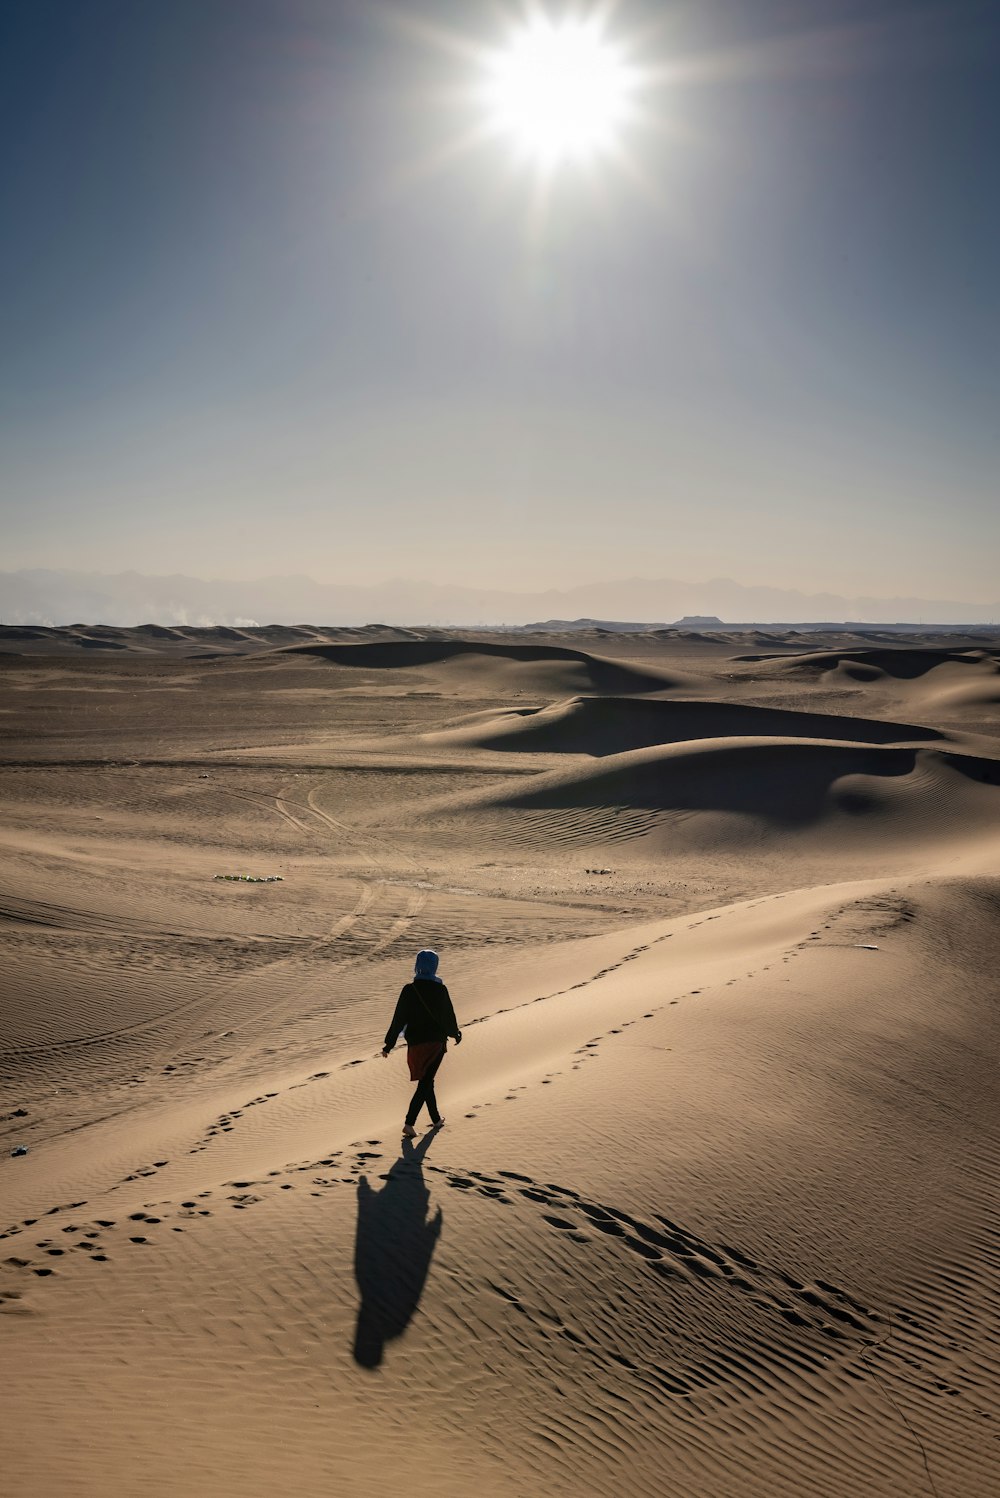 person walking on desert under clear blue sky